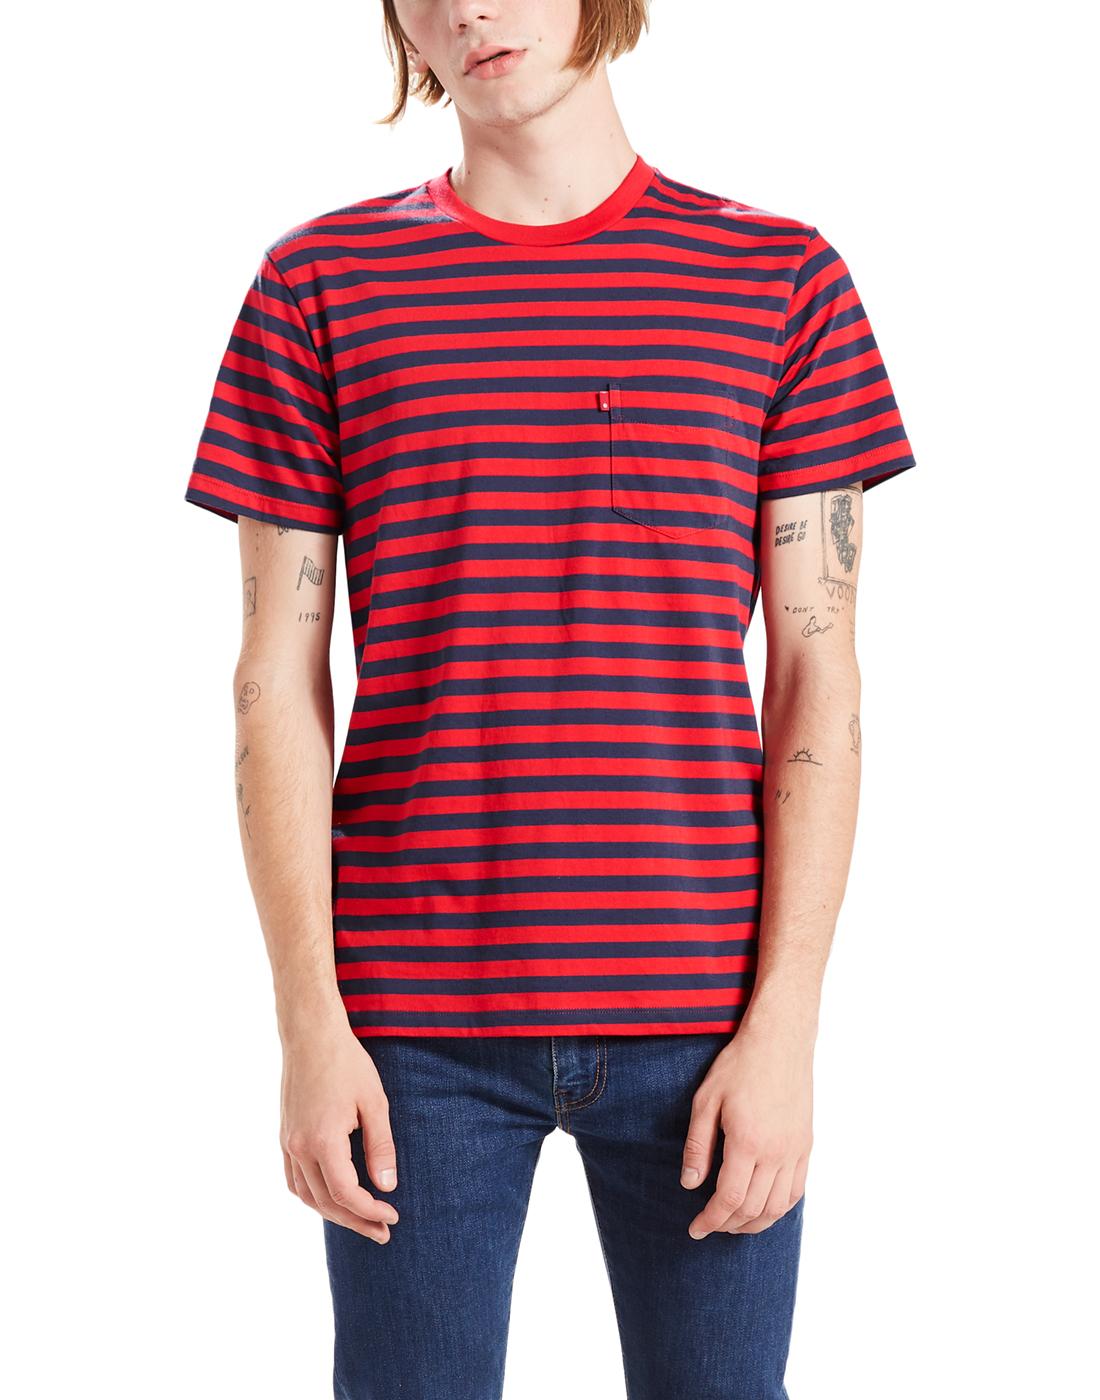 LEVI'S Men's Retro Mod Stripe Sunset Pocket T-Shirt Red/Navy